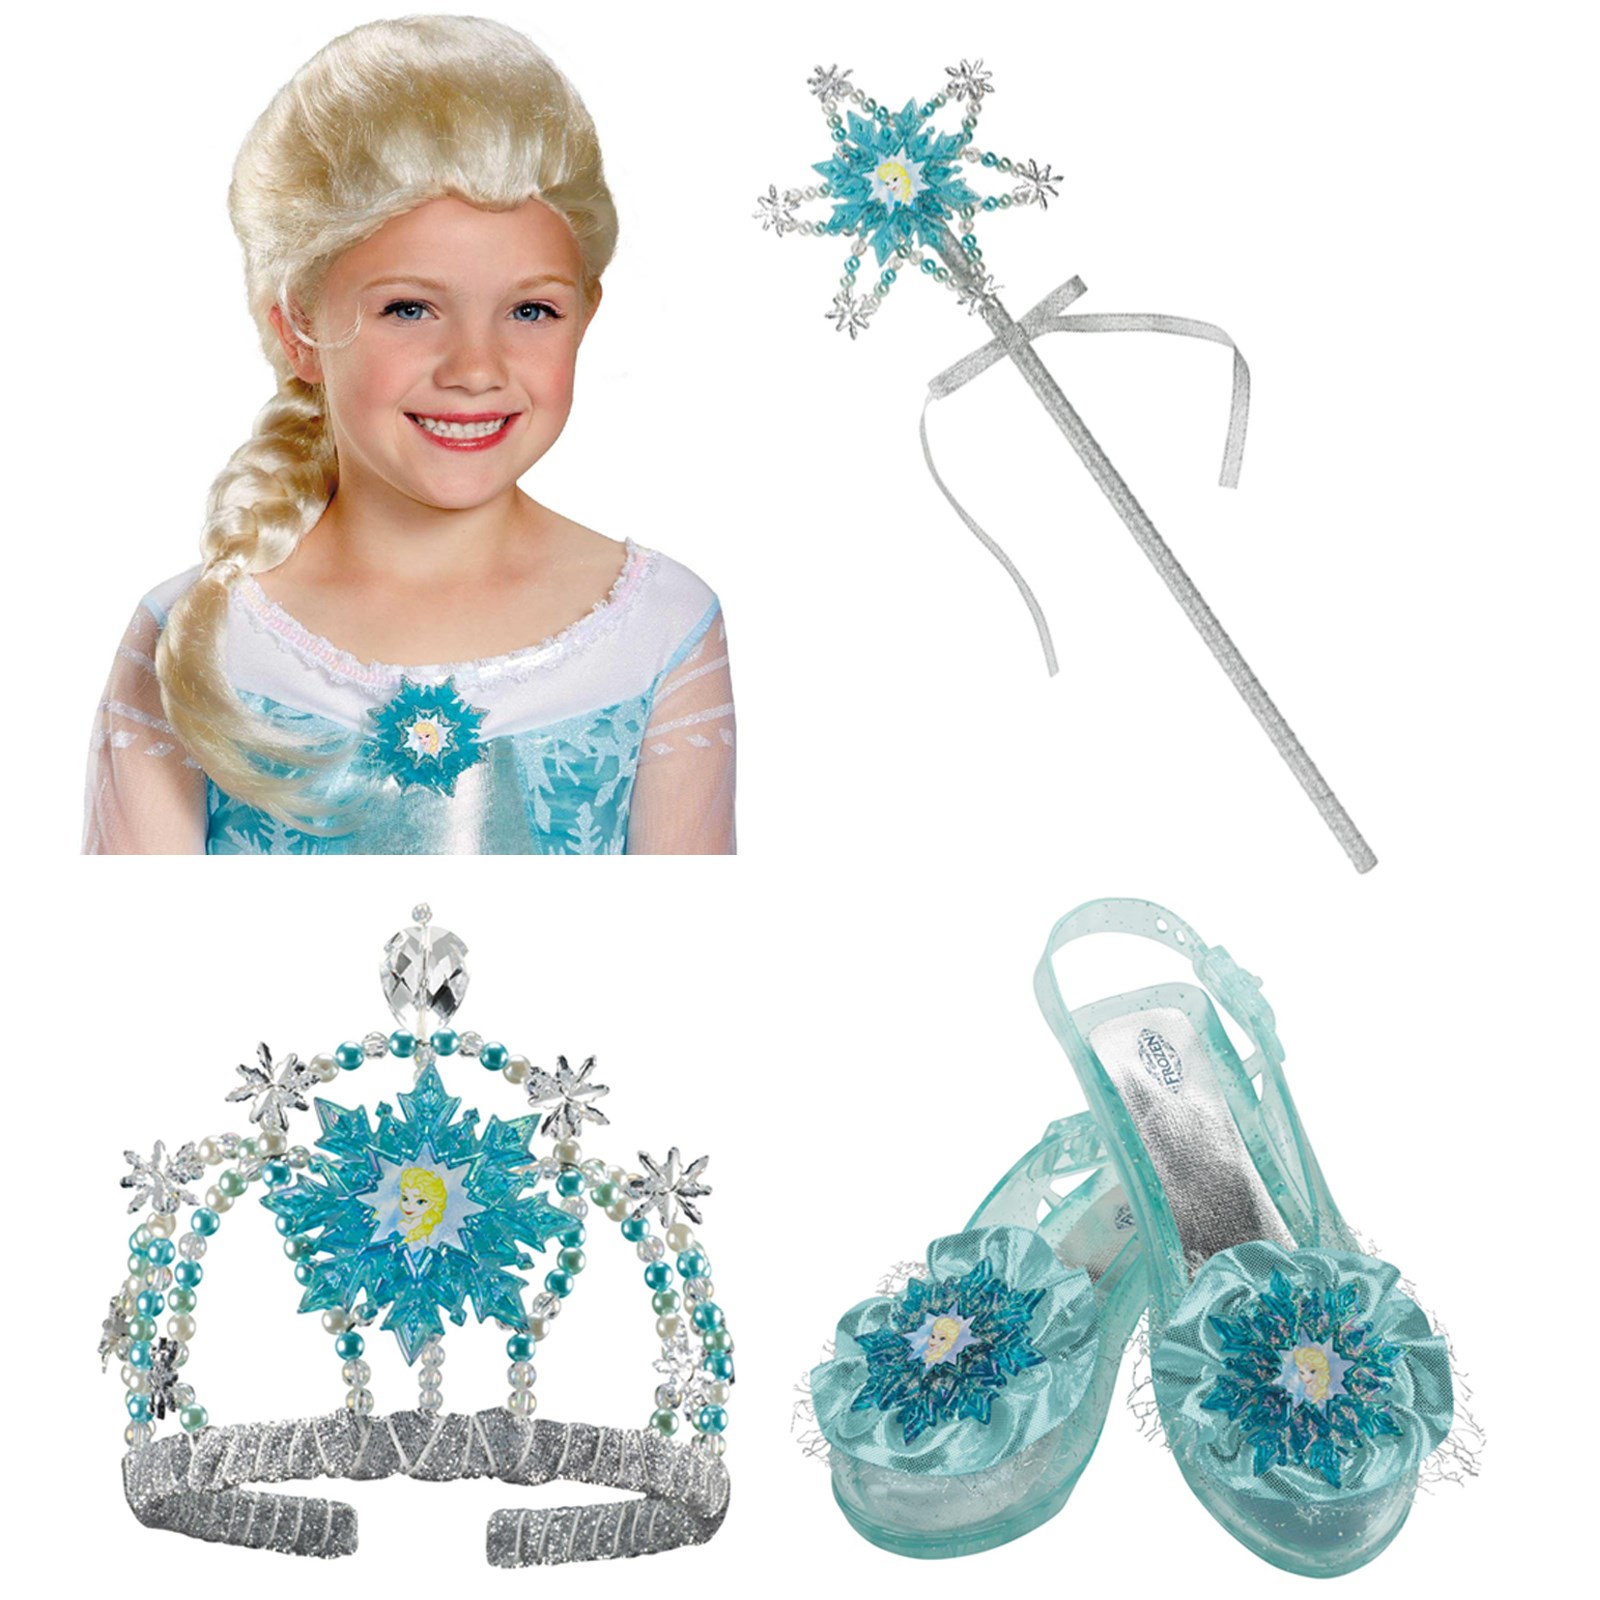 Frozen Elsa Accessories - Complete Kit